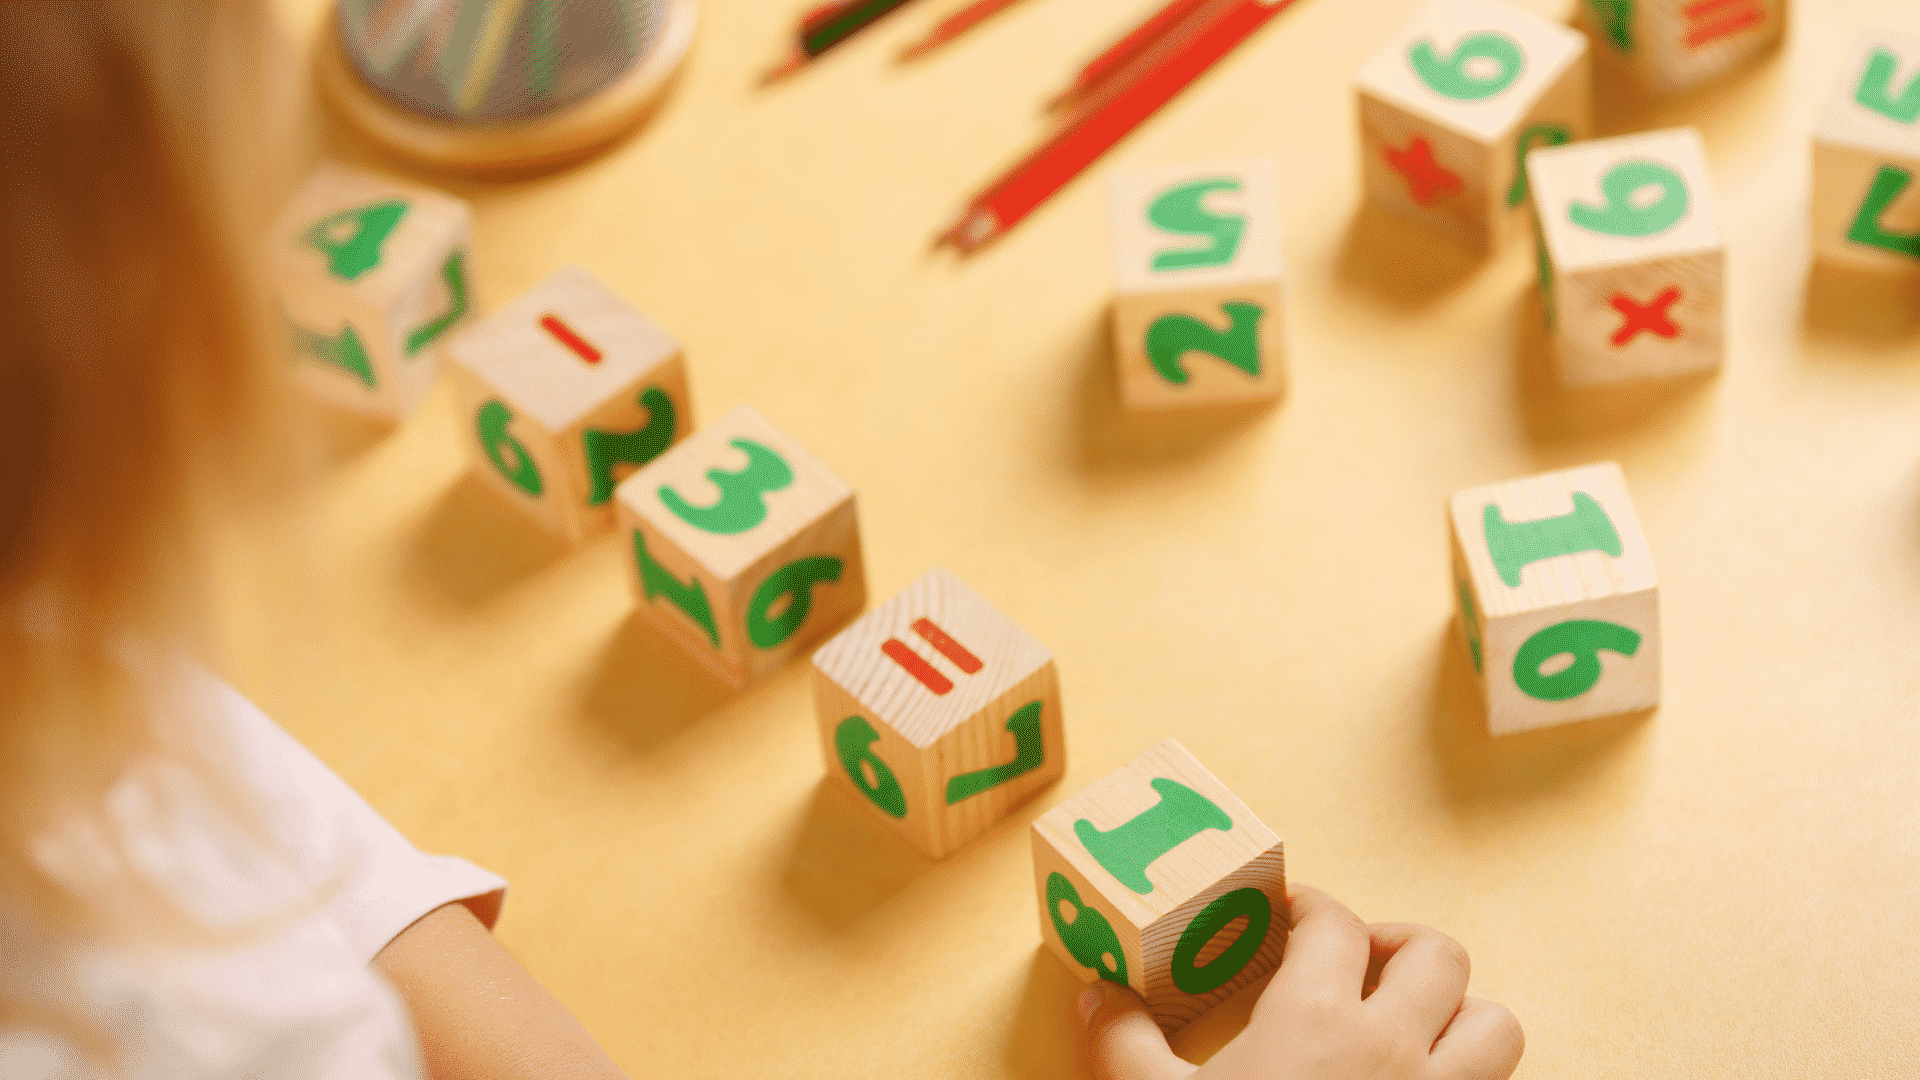 Brinquedos educativos: 5 maneiras divertidas de ensinar matemática